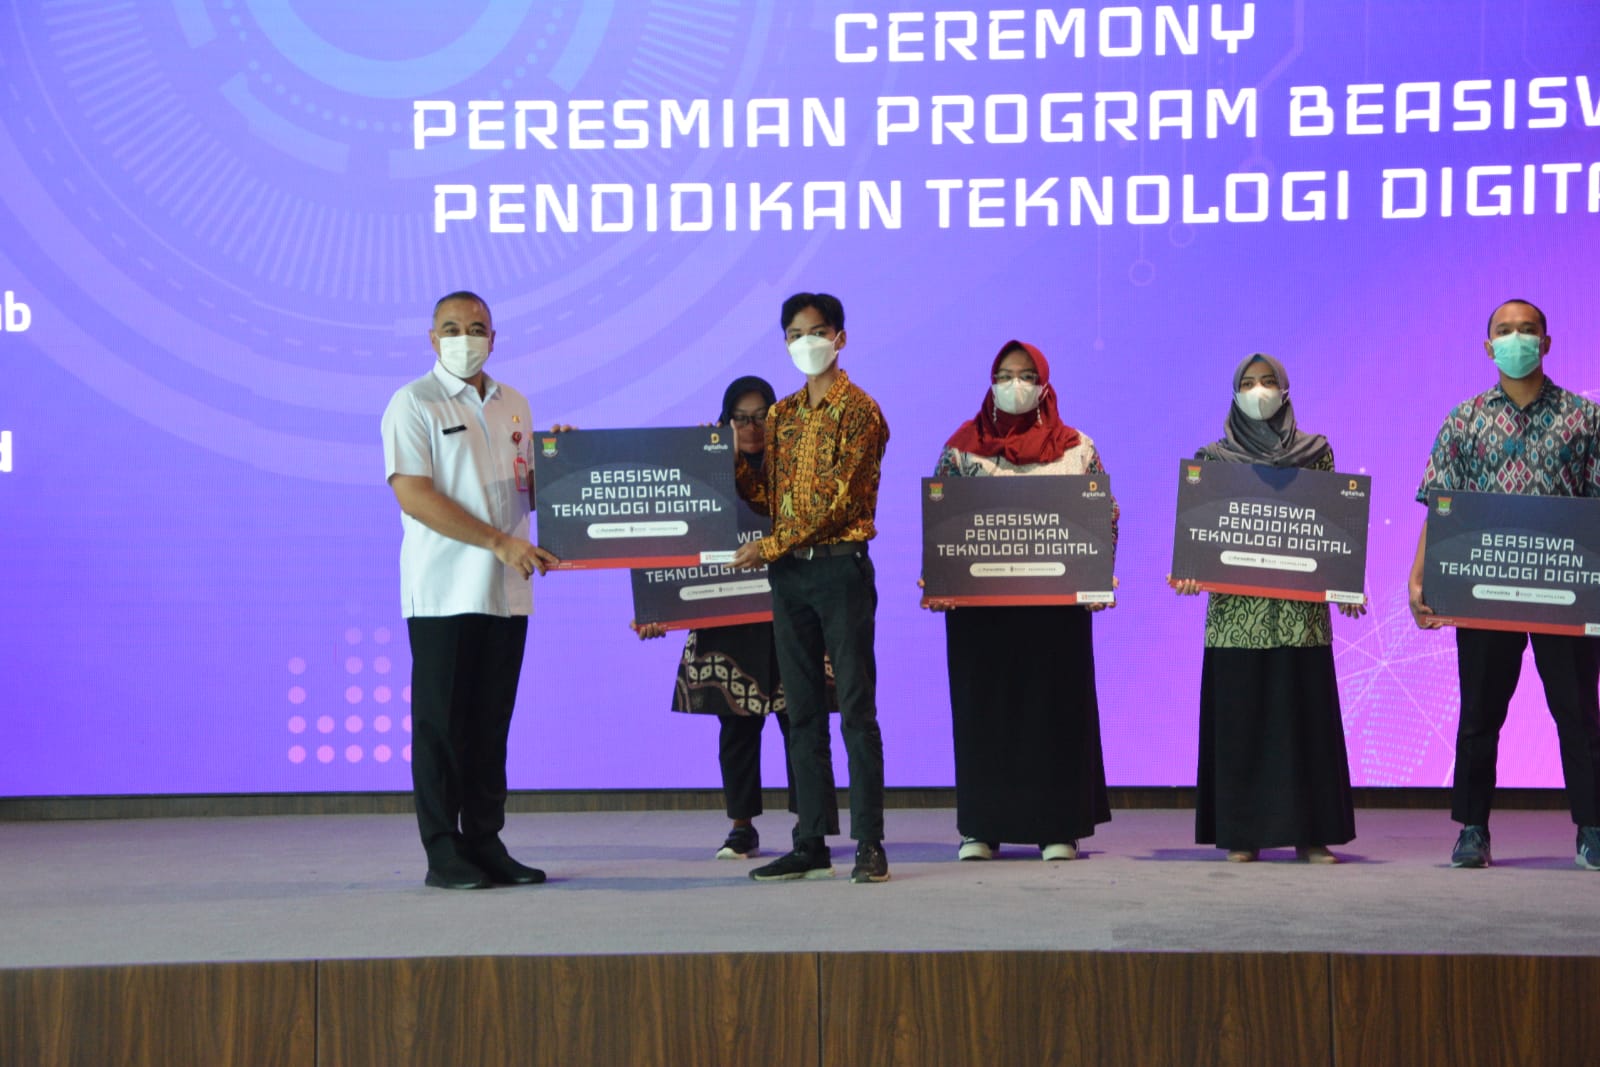 20 Lulusan SMA di Tangerang Dapat Beasiswa Pendidikan Teknologi Digital